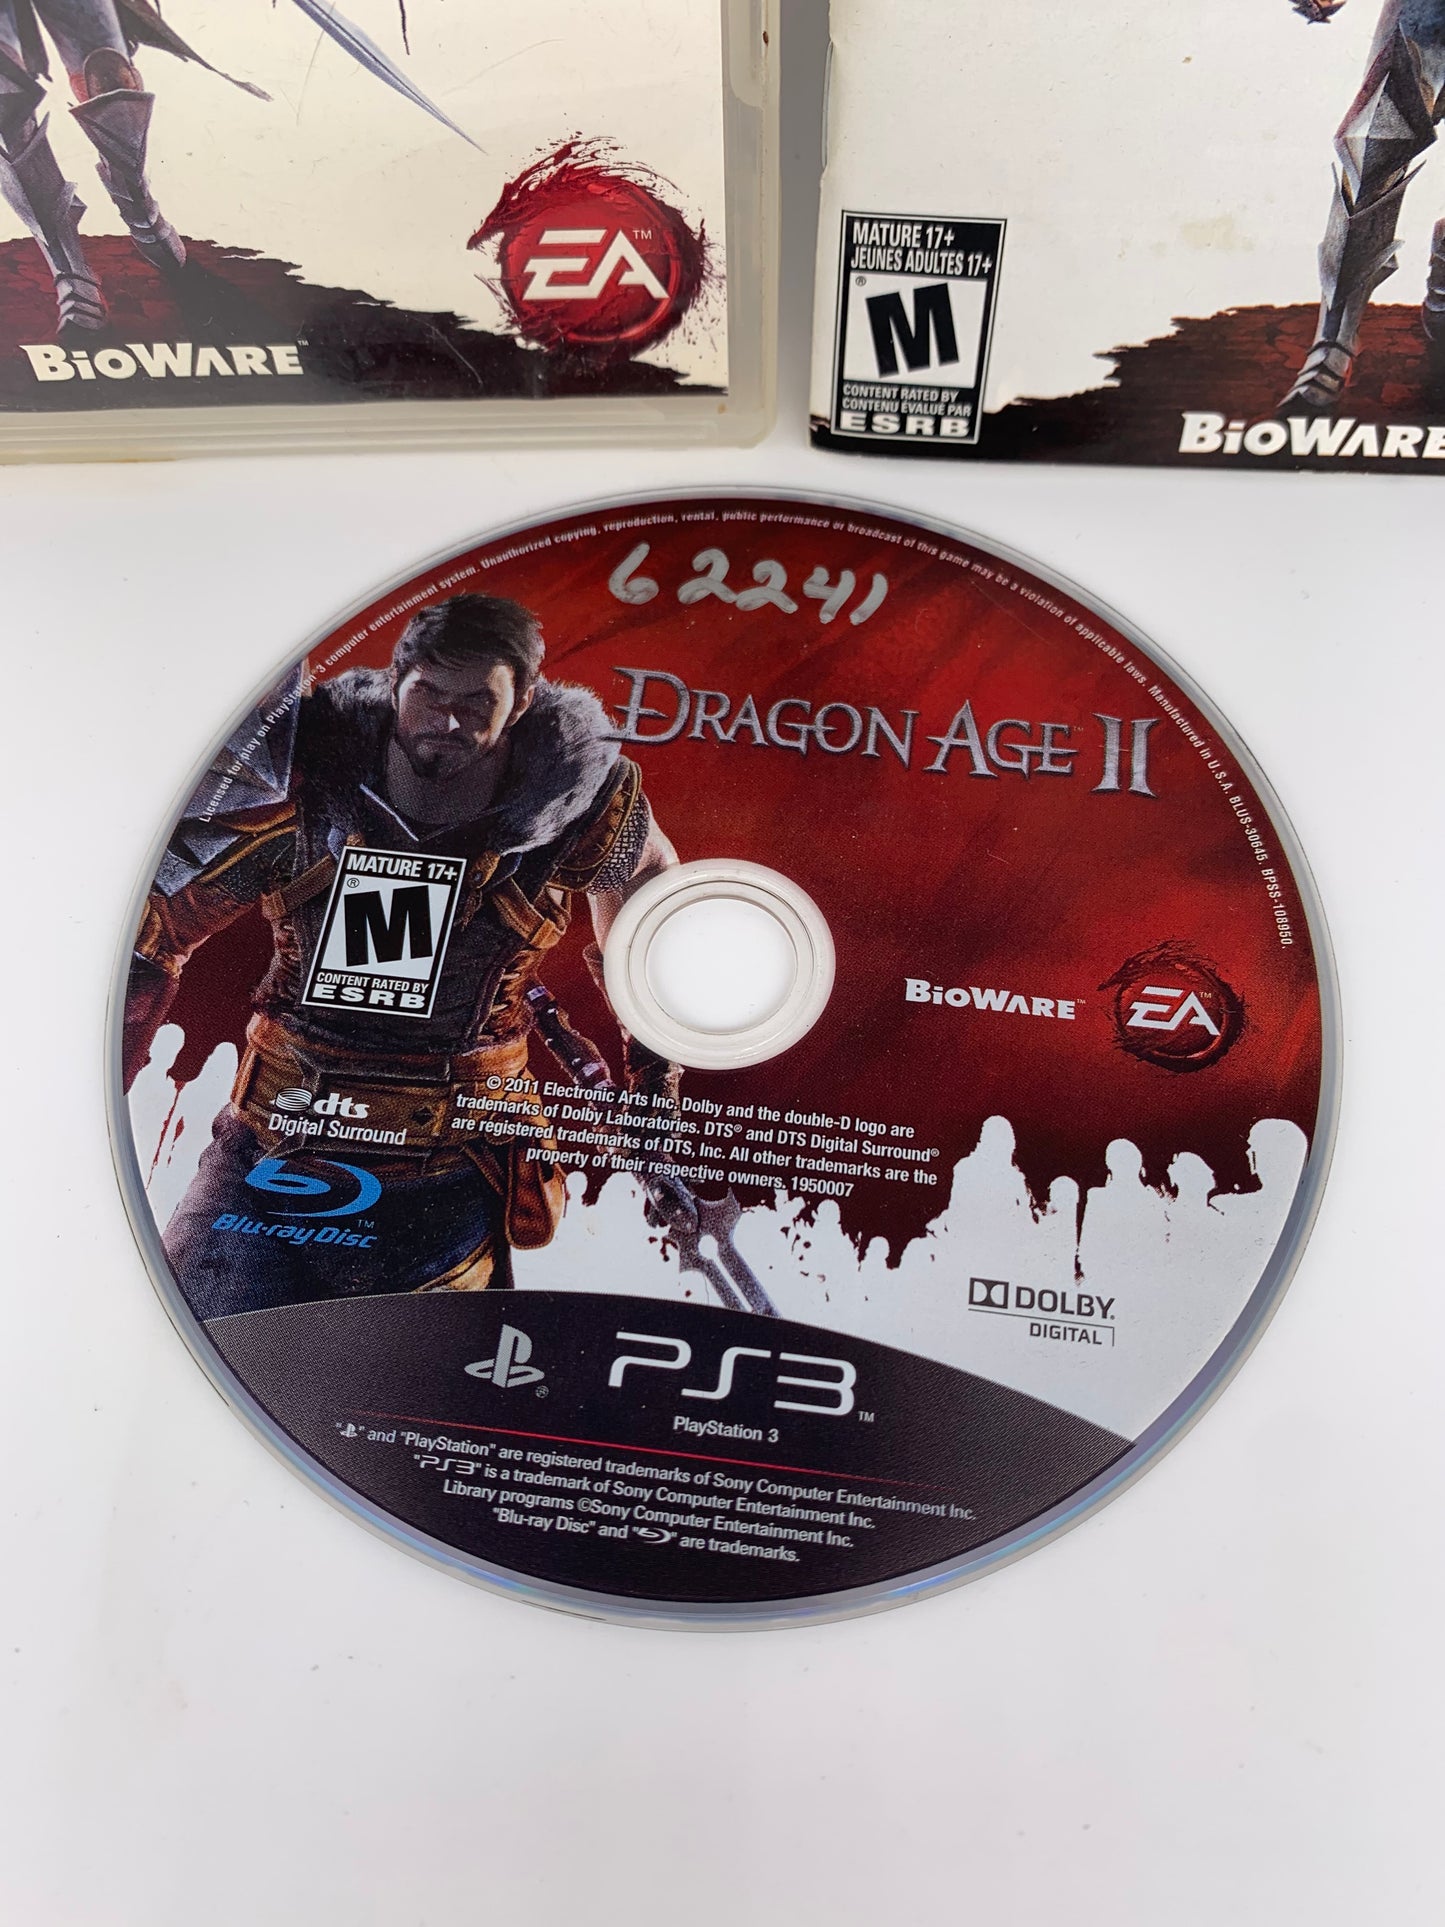 SONY PLAYSTATiON 3 [PS3] | DRAGON AGE II